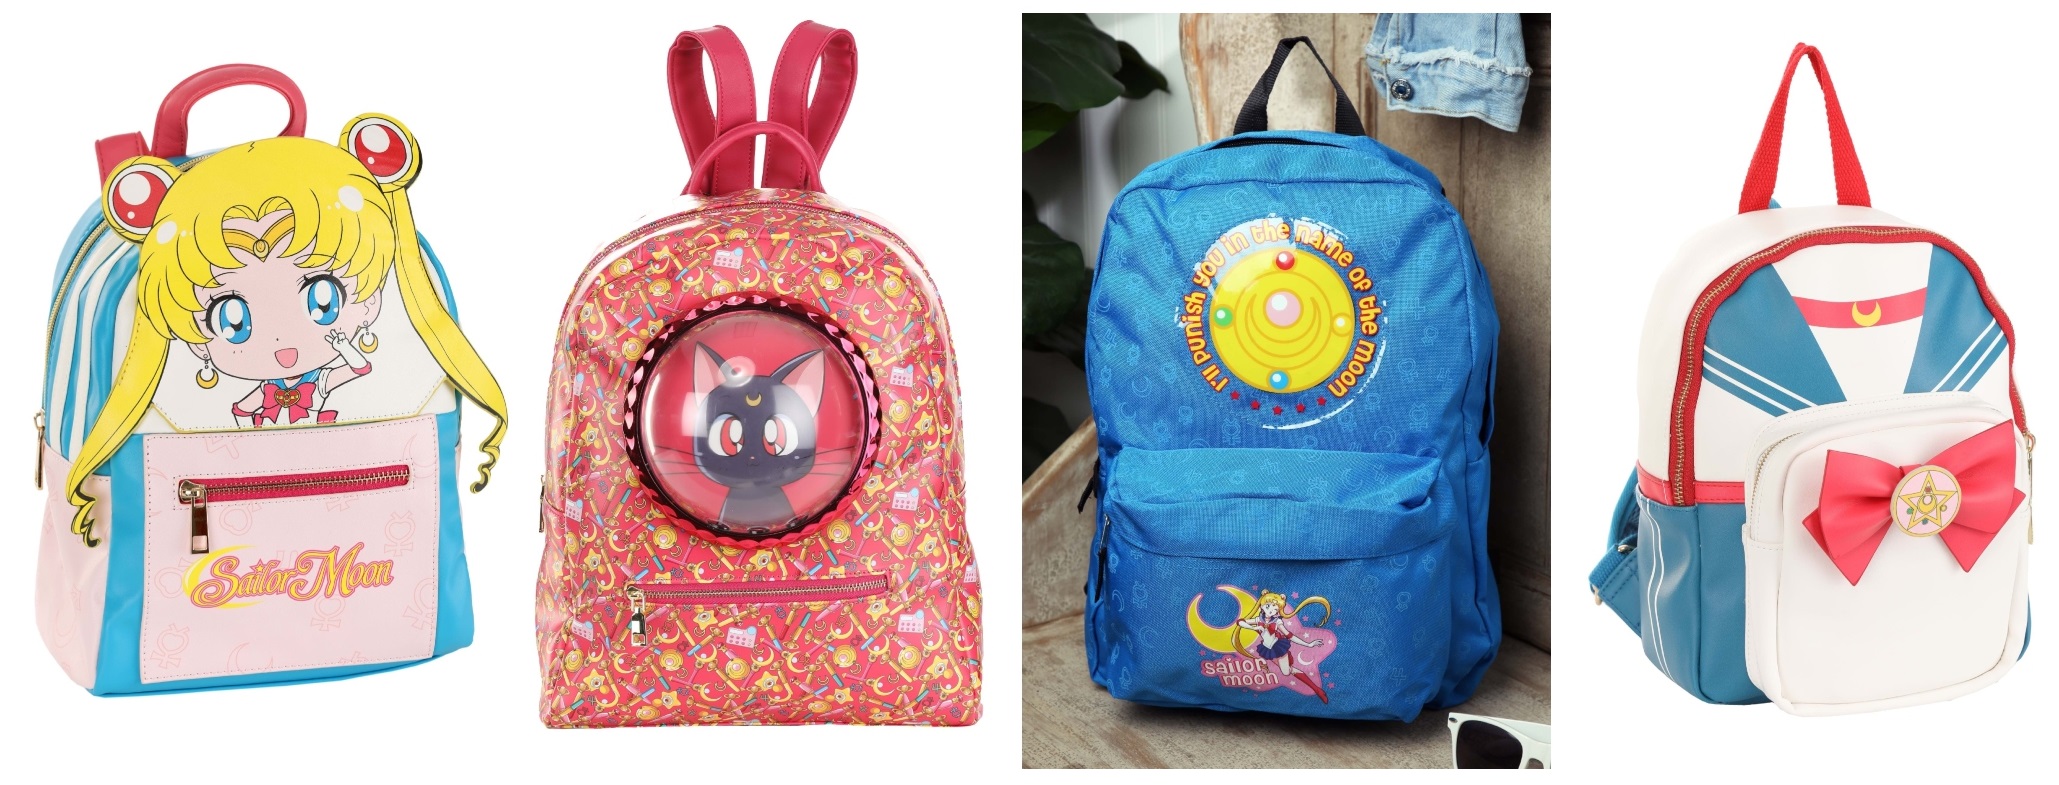 Sailor Moon Bags